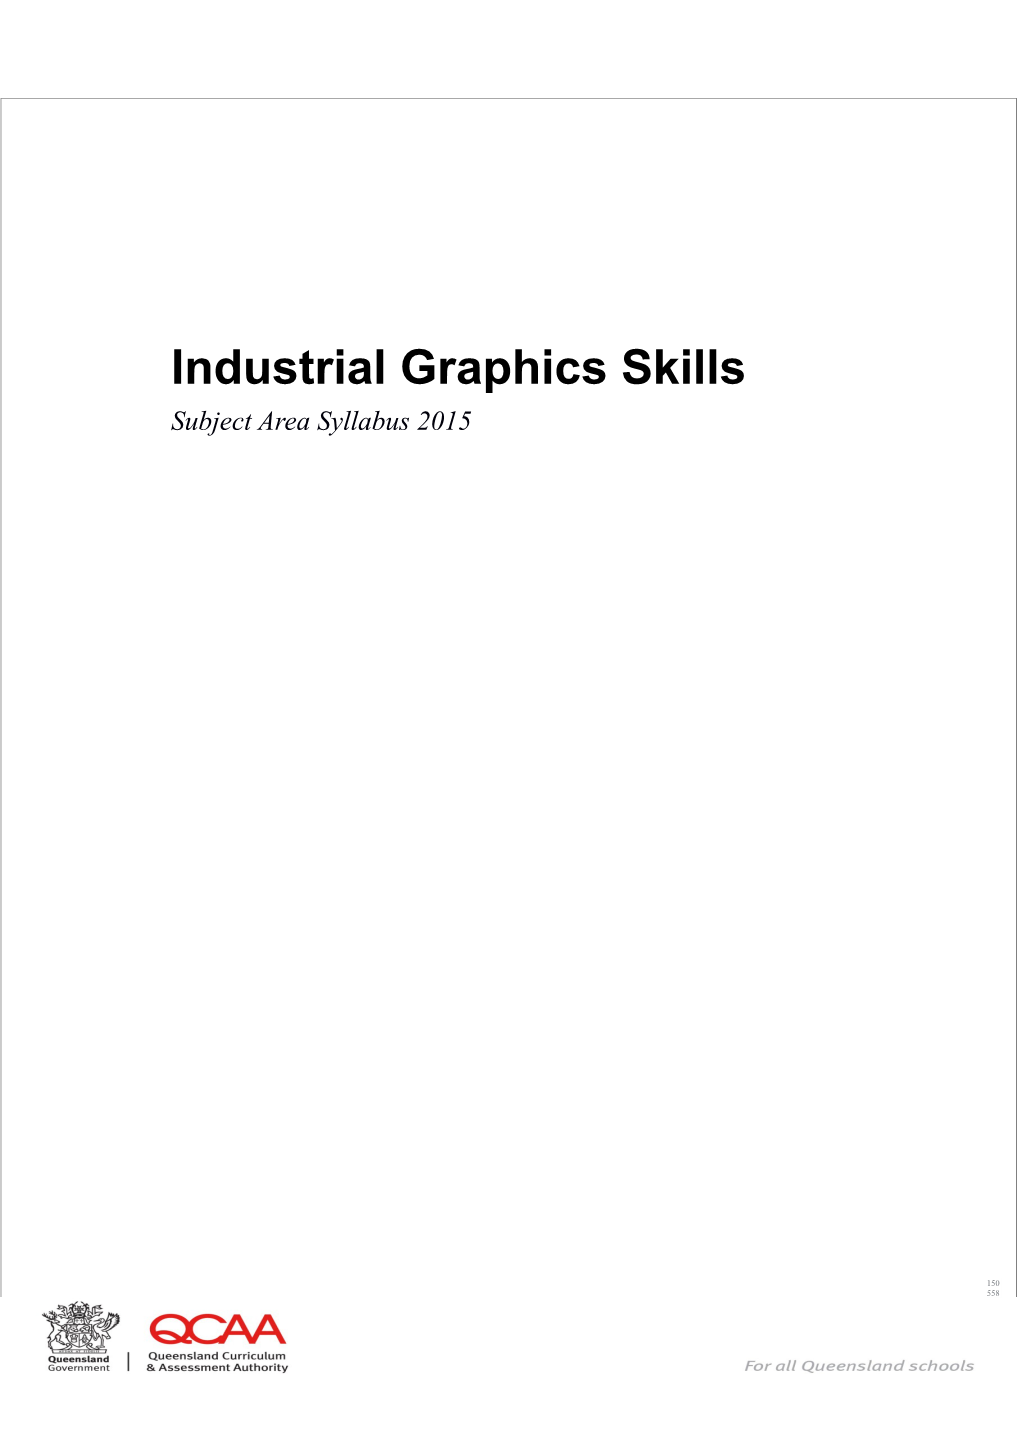 Industrial Graphics Skills 2015